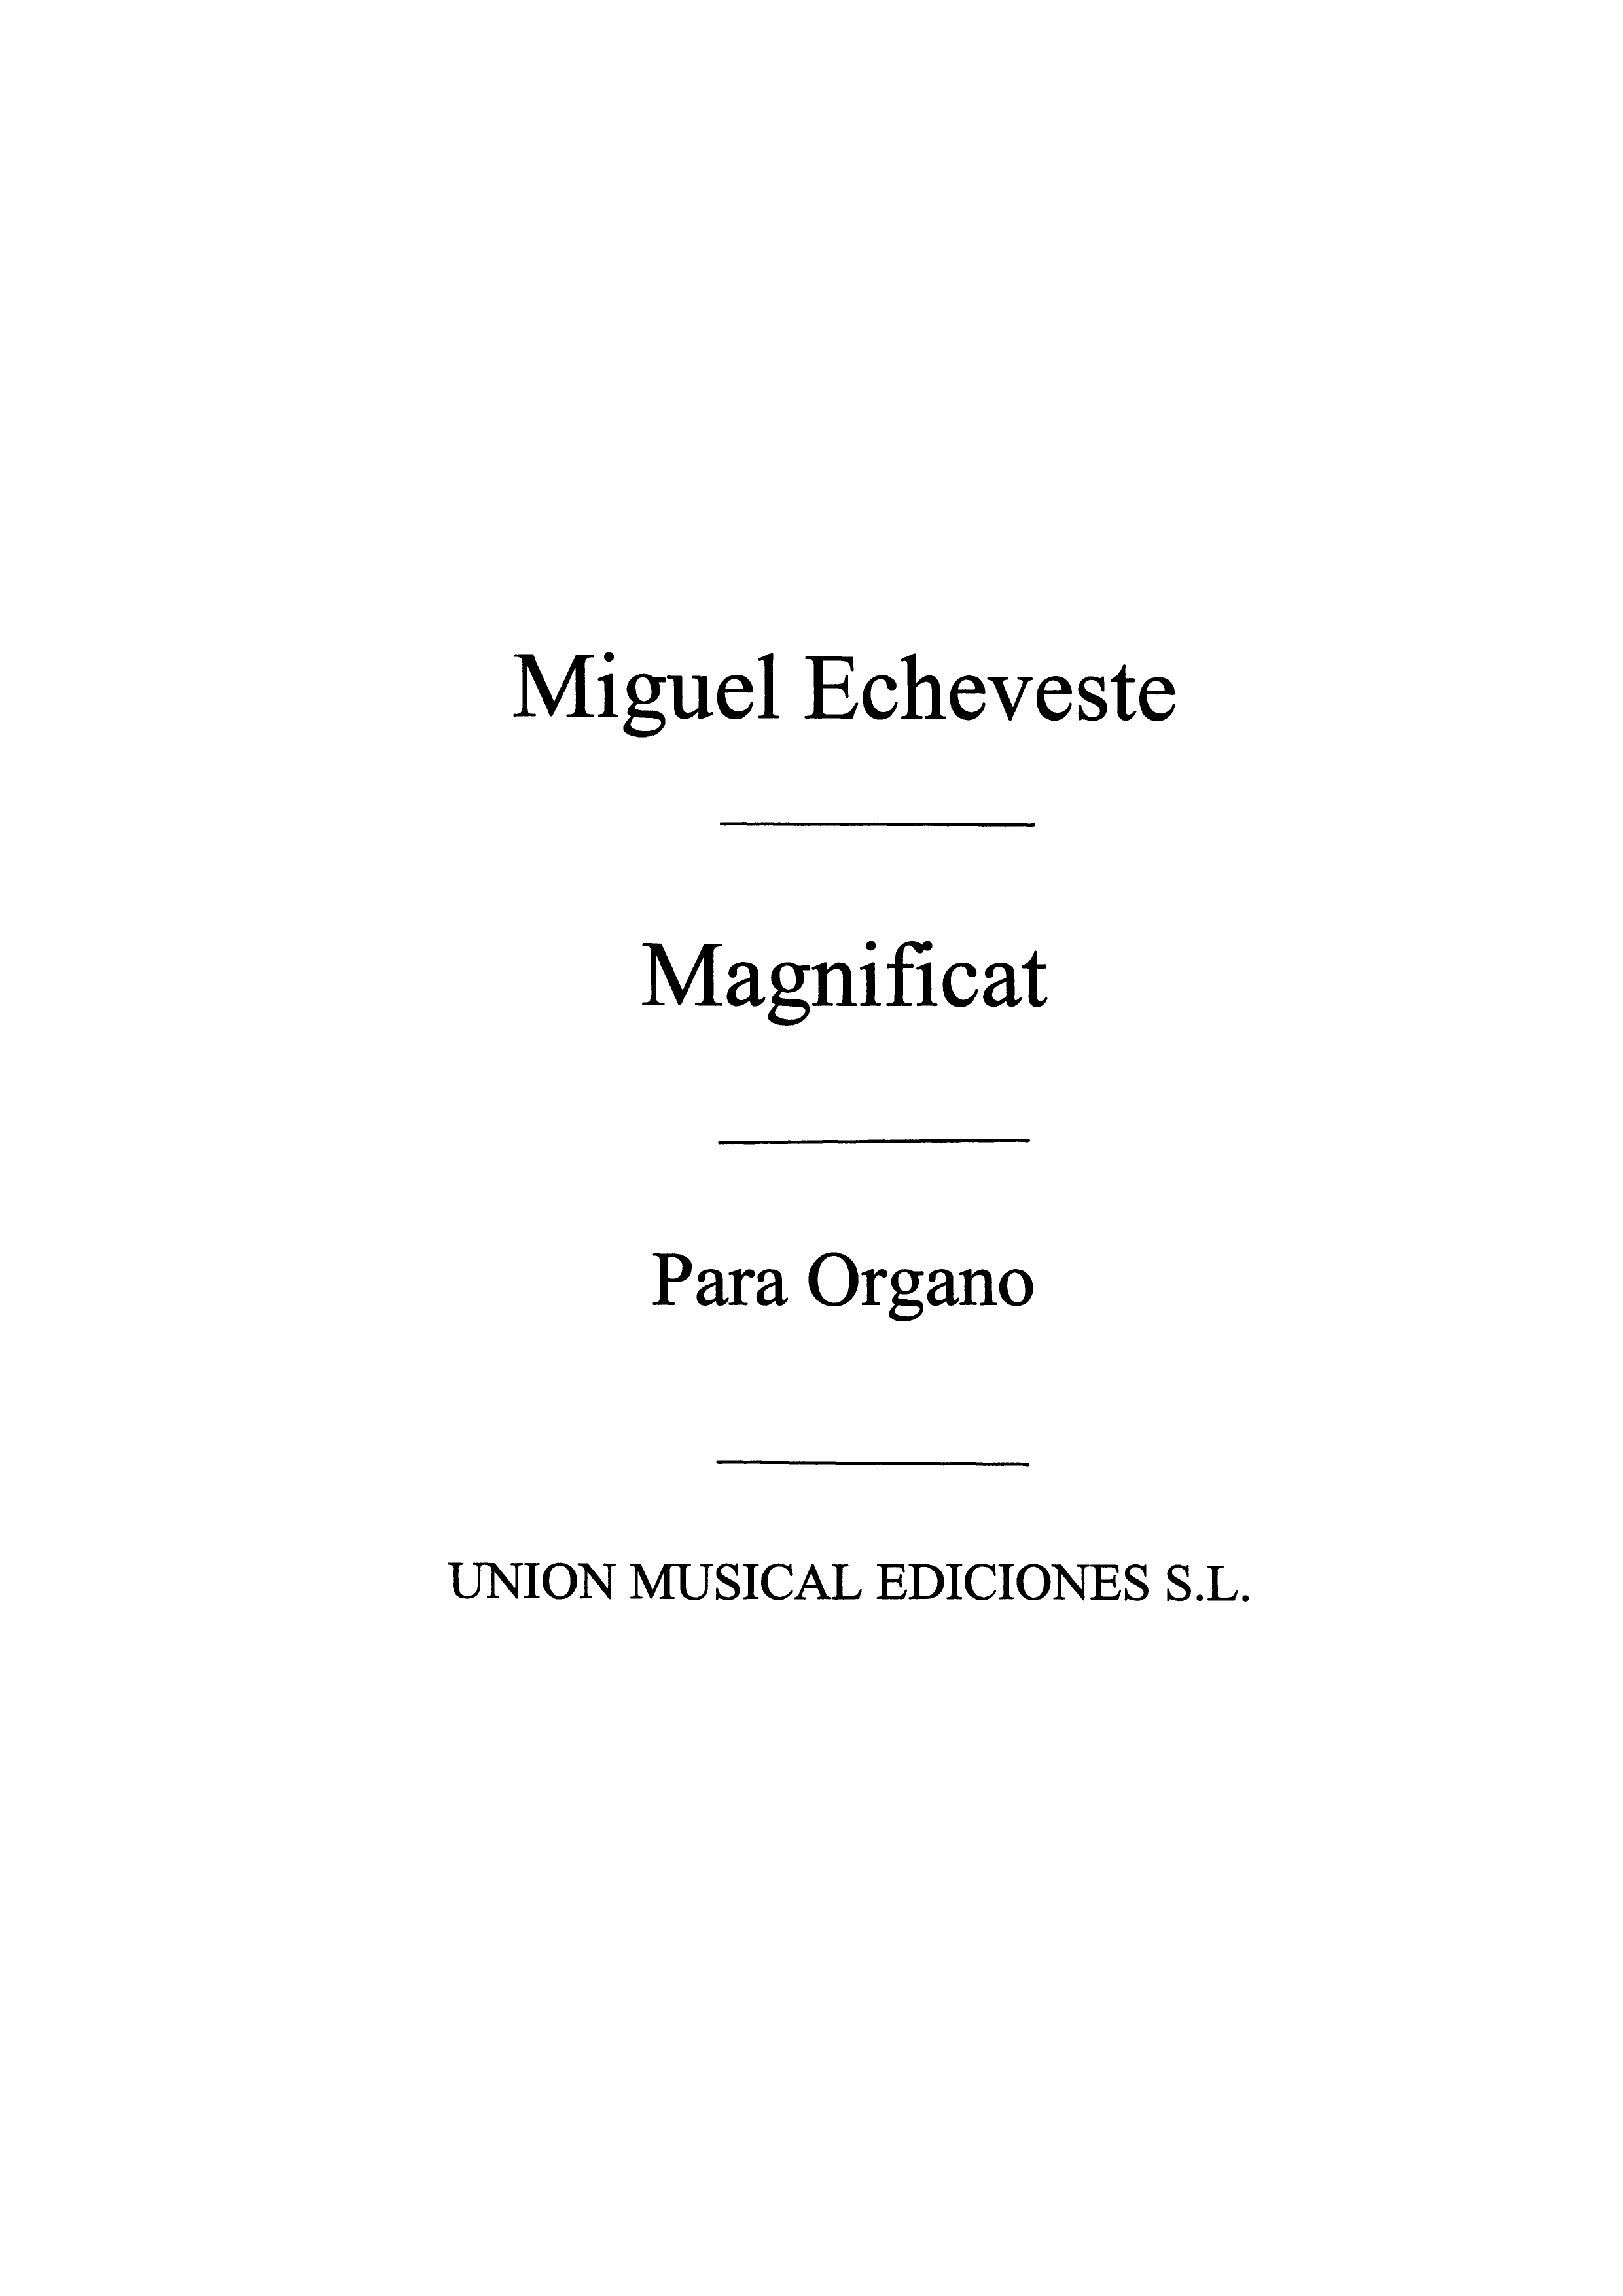 Echeveste: Magnificat Variaciones for Organ